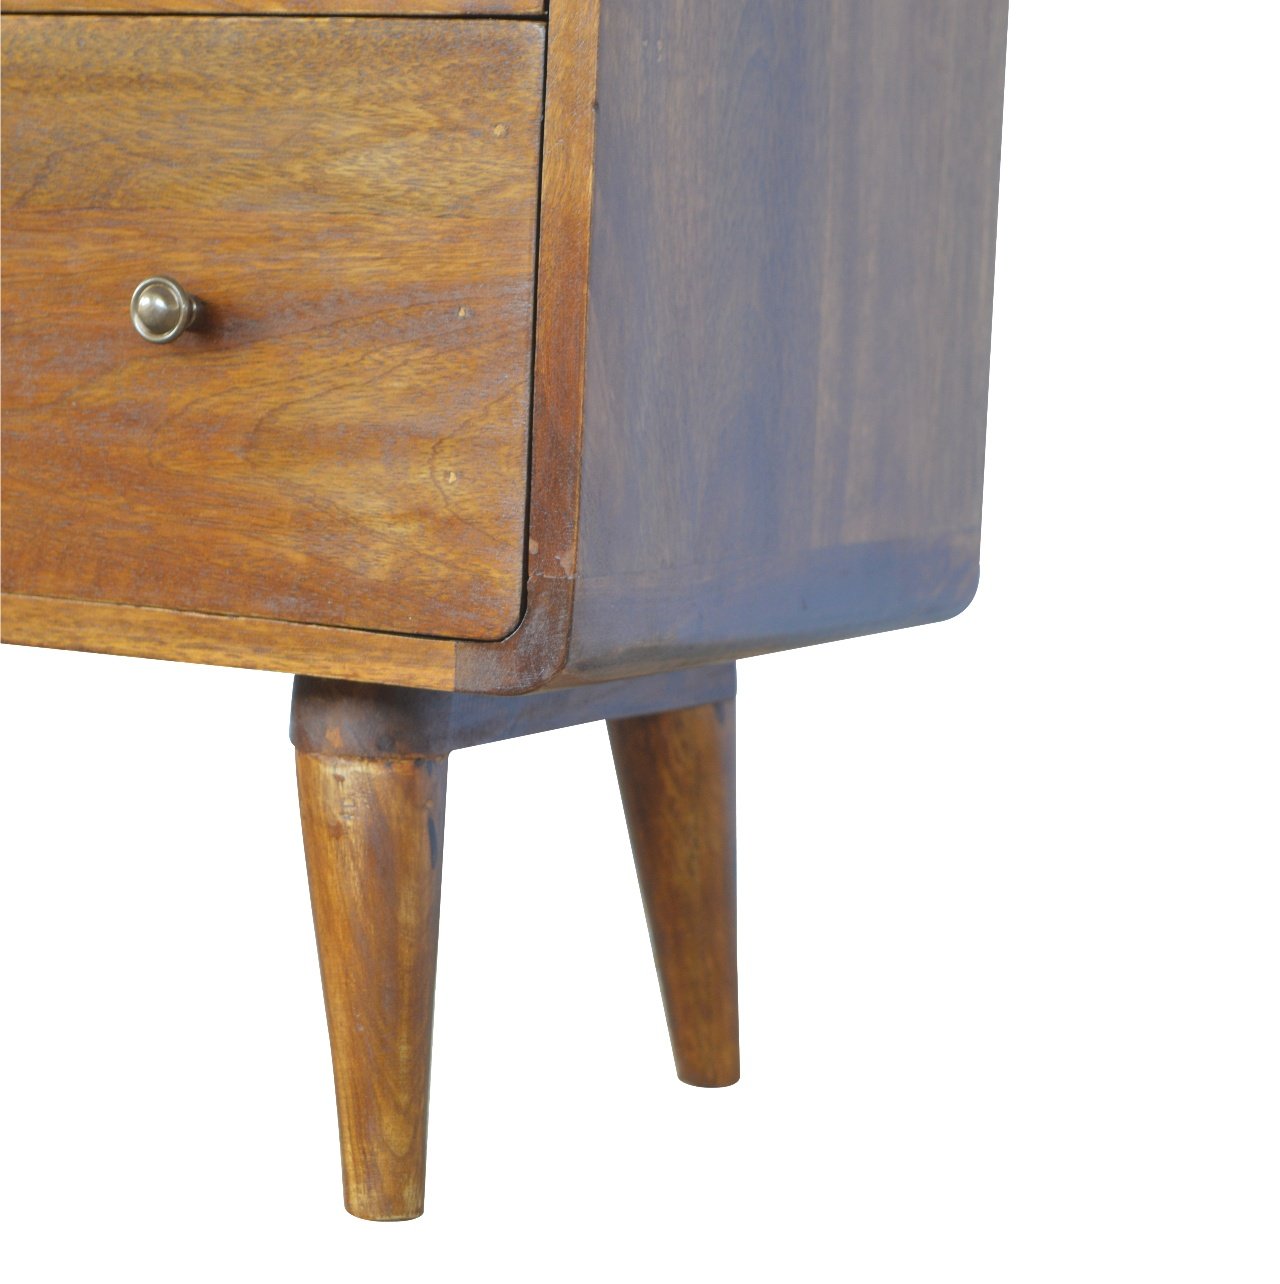 Century handmade solid wood 3 drawer chest of drawers in deep chestnut finish | malletandplane.com